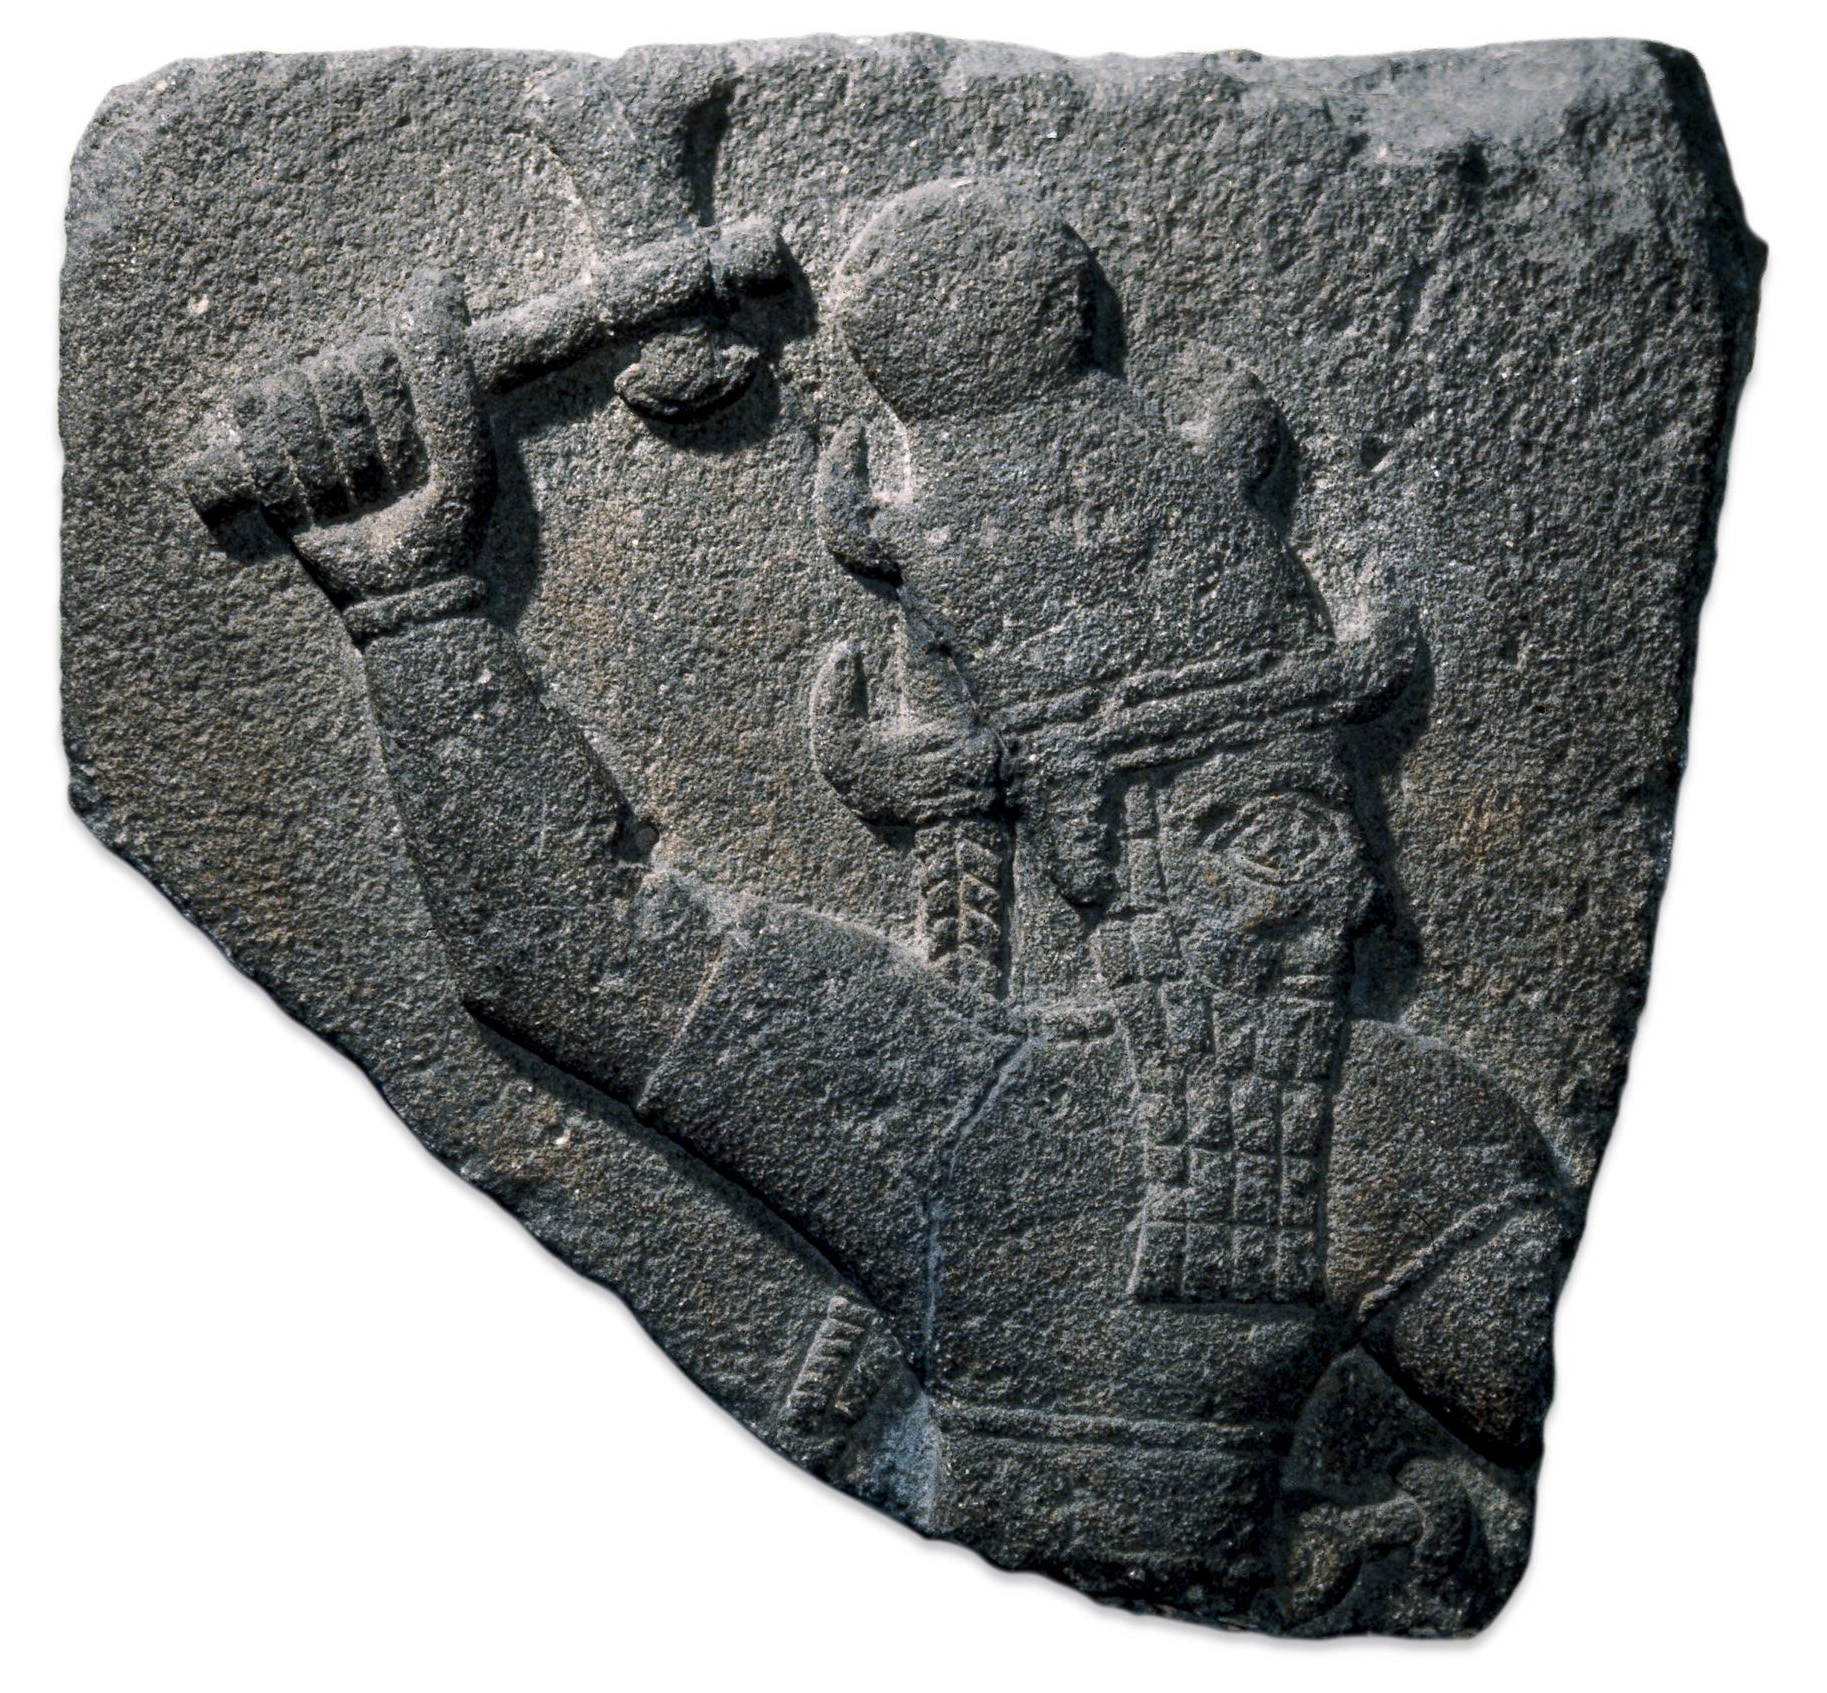 Hittites, an introduction